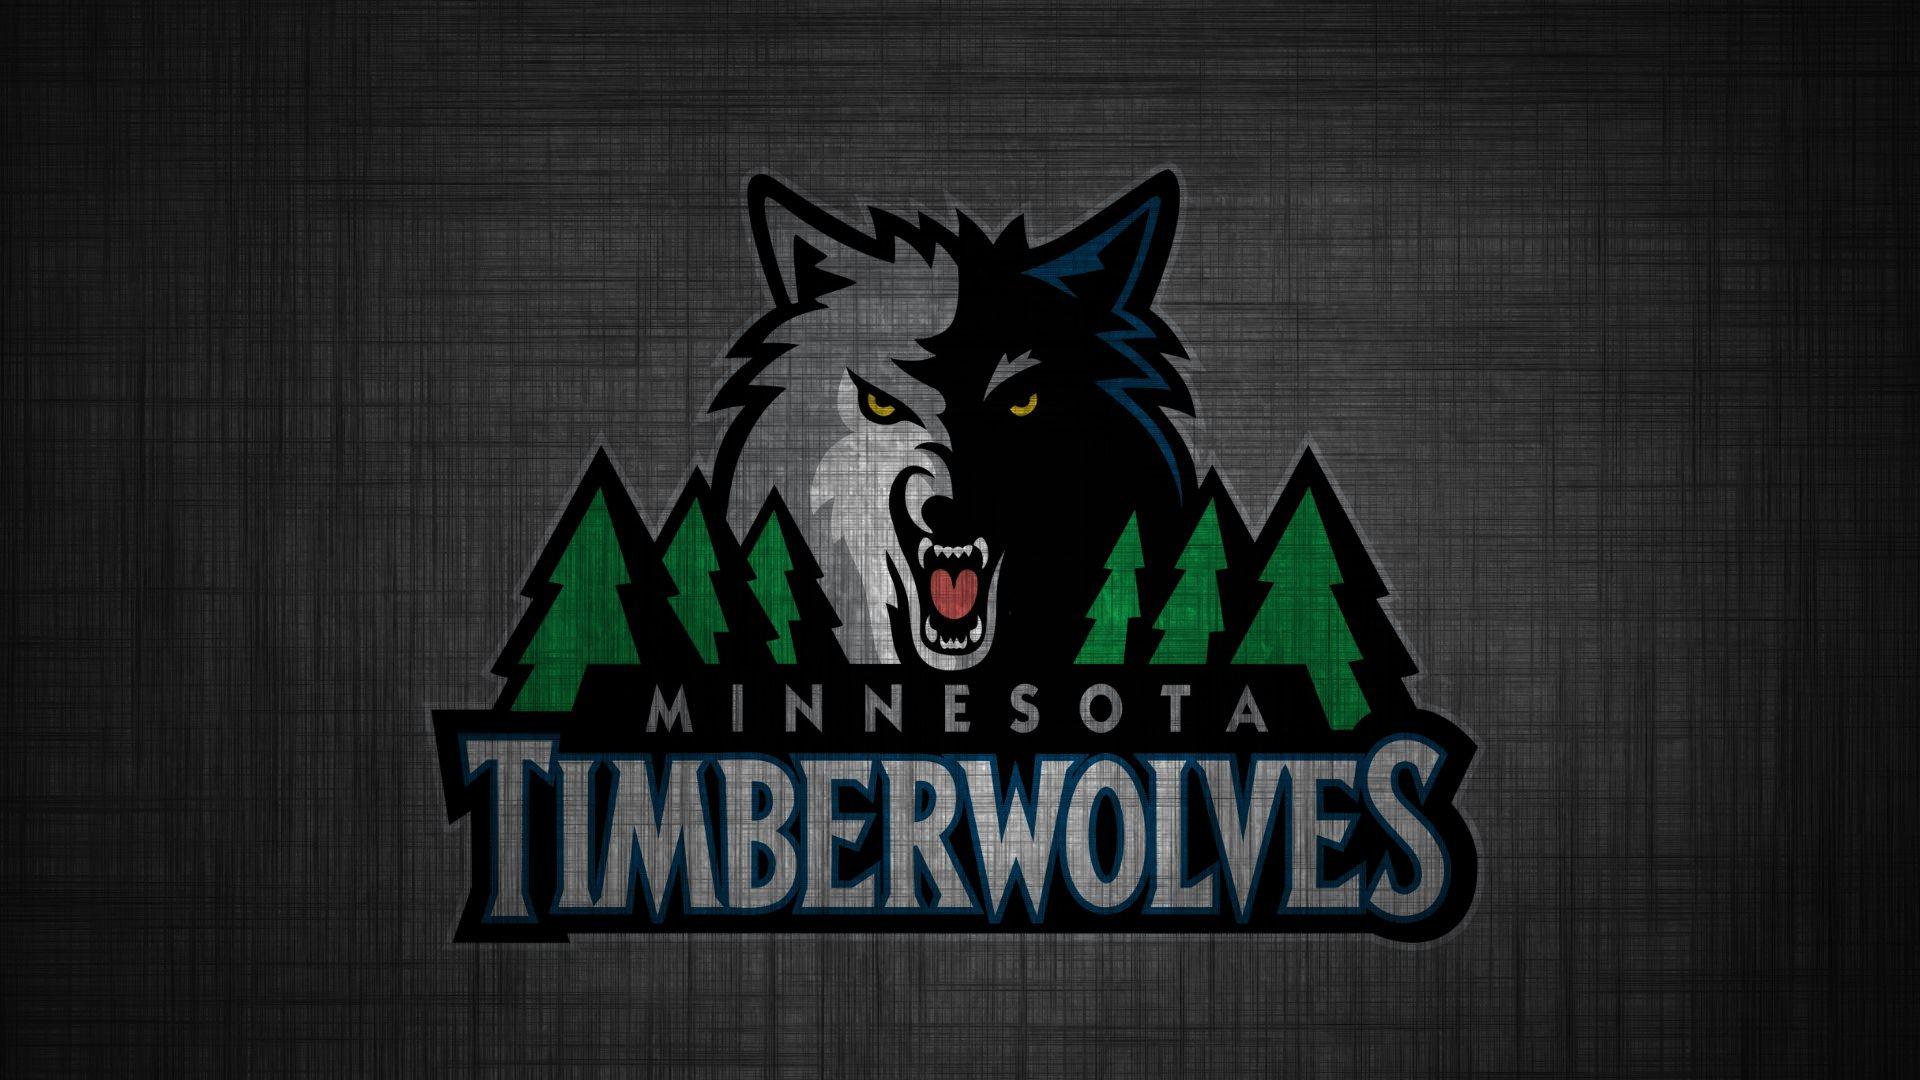 Minnesota Timberwolves Wallpaper, Live Minnesota Timberwolves